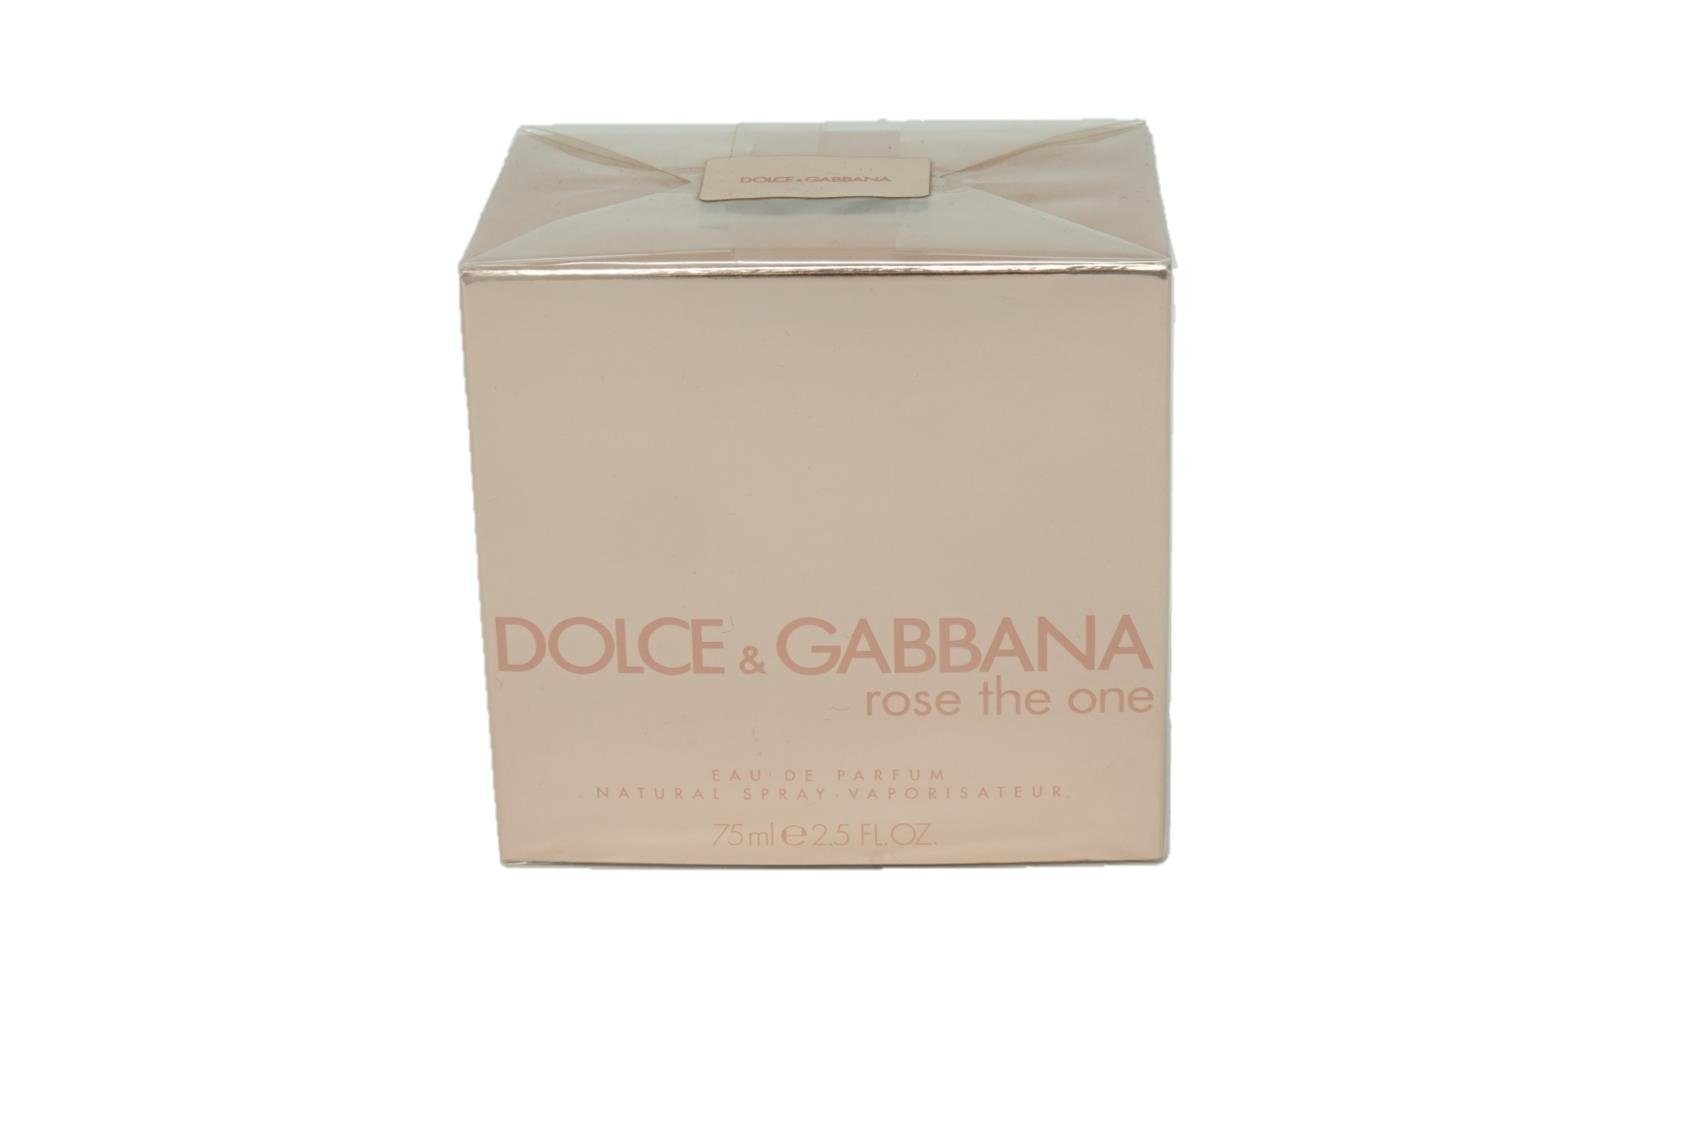 de The & Eau GABBANA Spray Gabbana 75ml Eau Toilette Vapo One Toilette Rose DOLCE Dolce & de